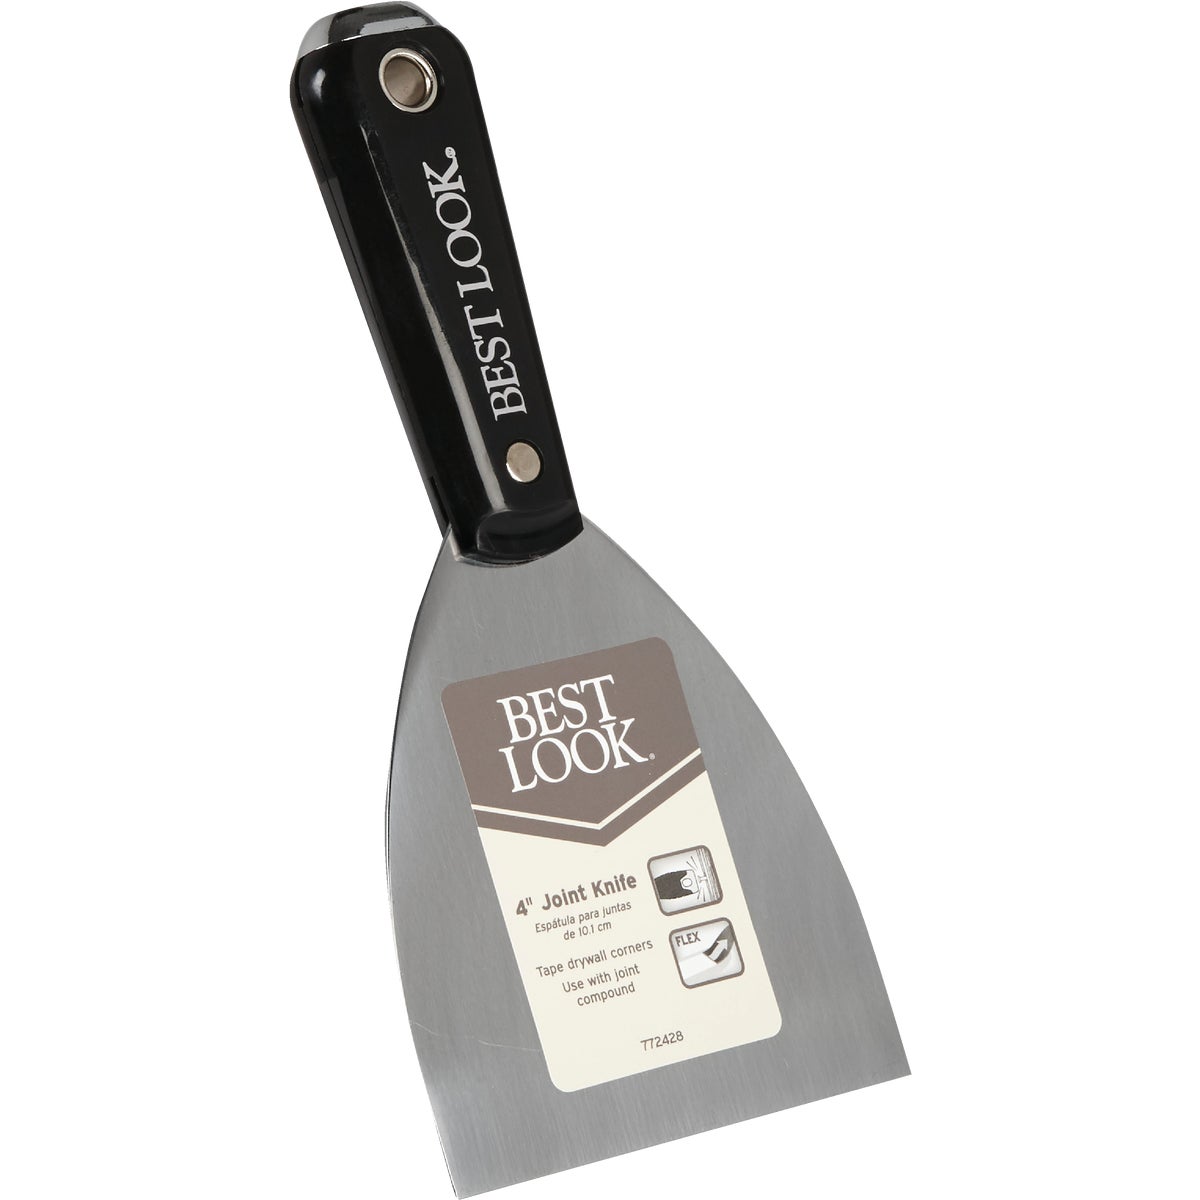 Item 772428, Flex joint knife has a mirror finish, solvent resistant nylon plastic 